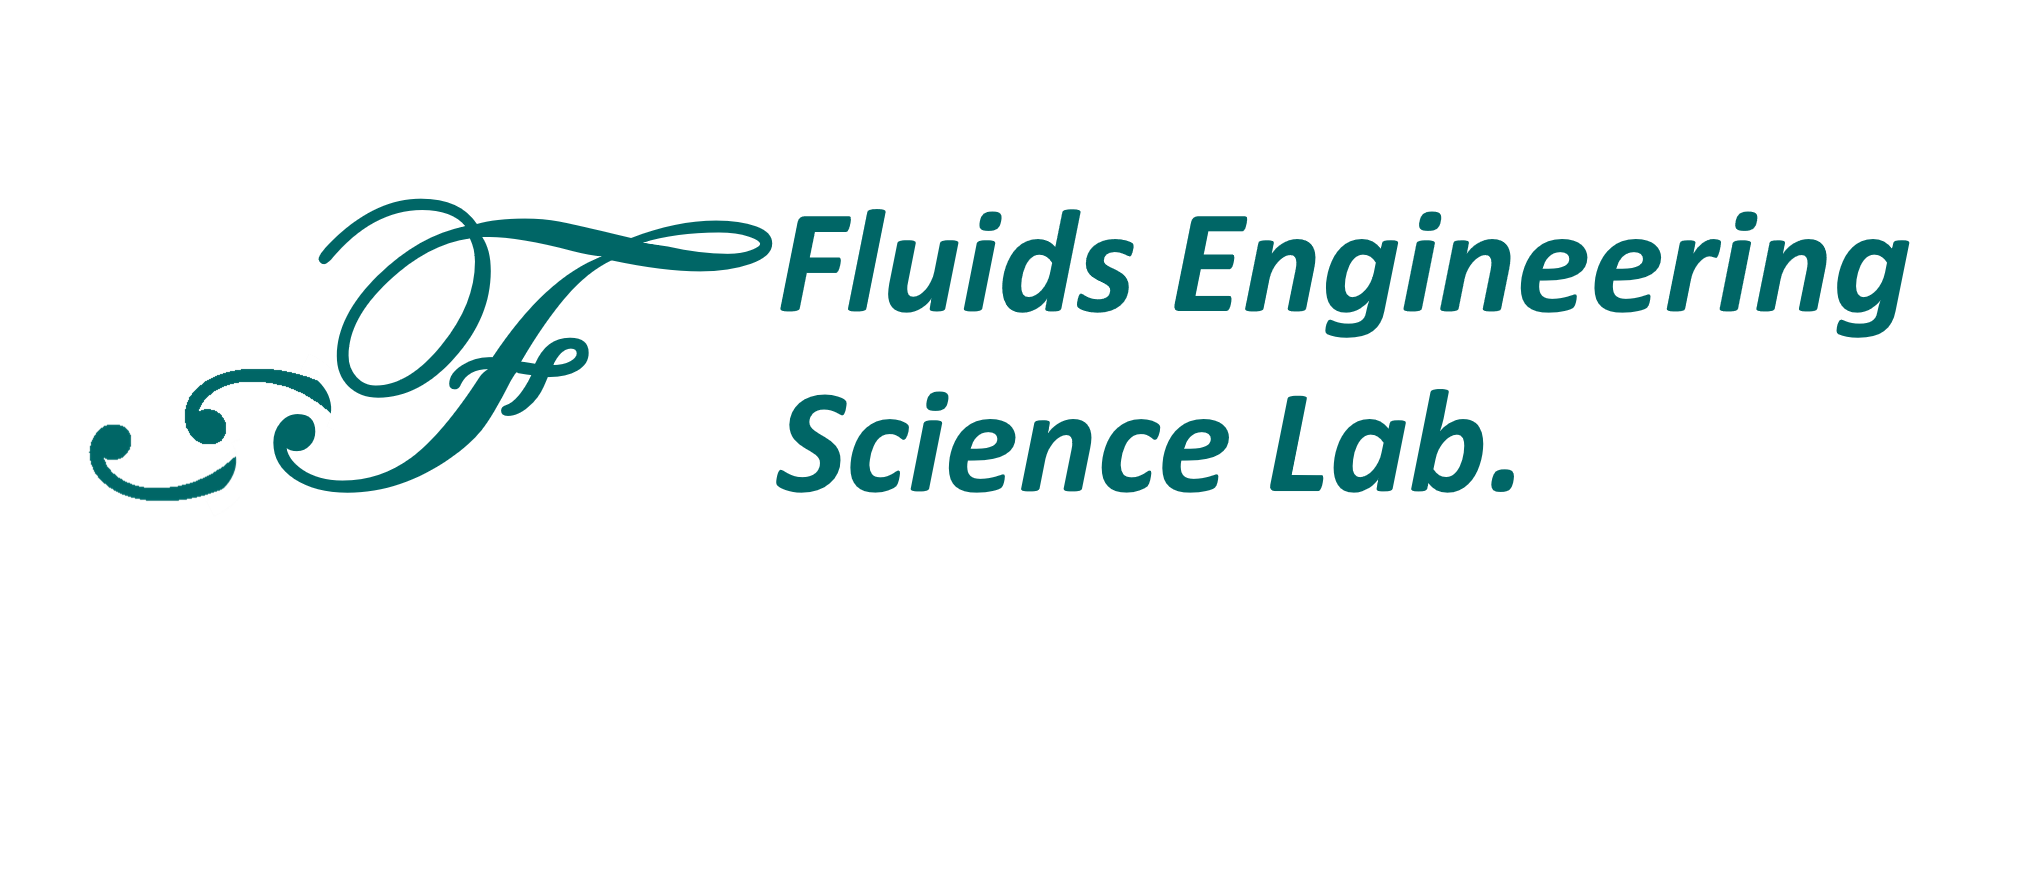 Fluids Engineering Science Laboratry